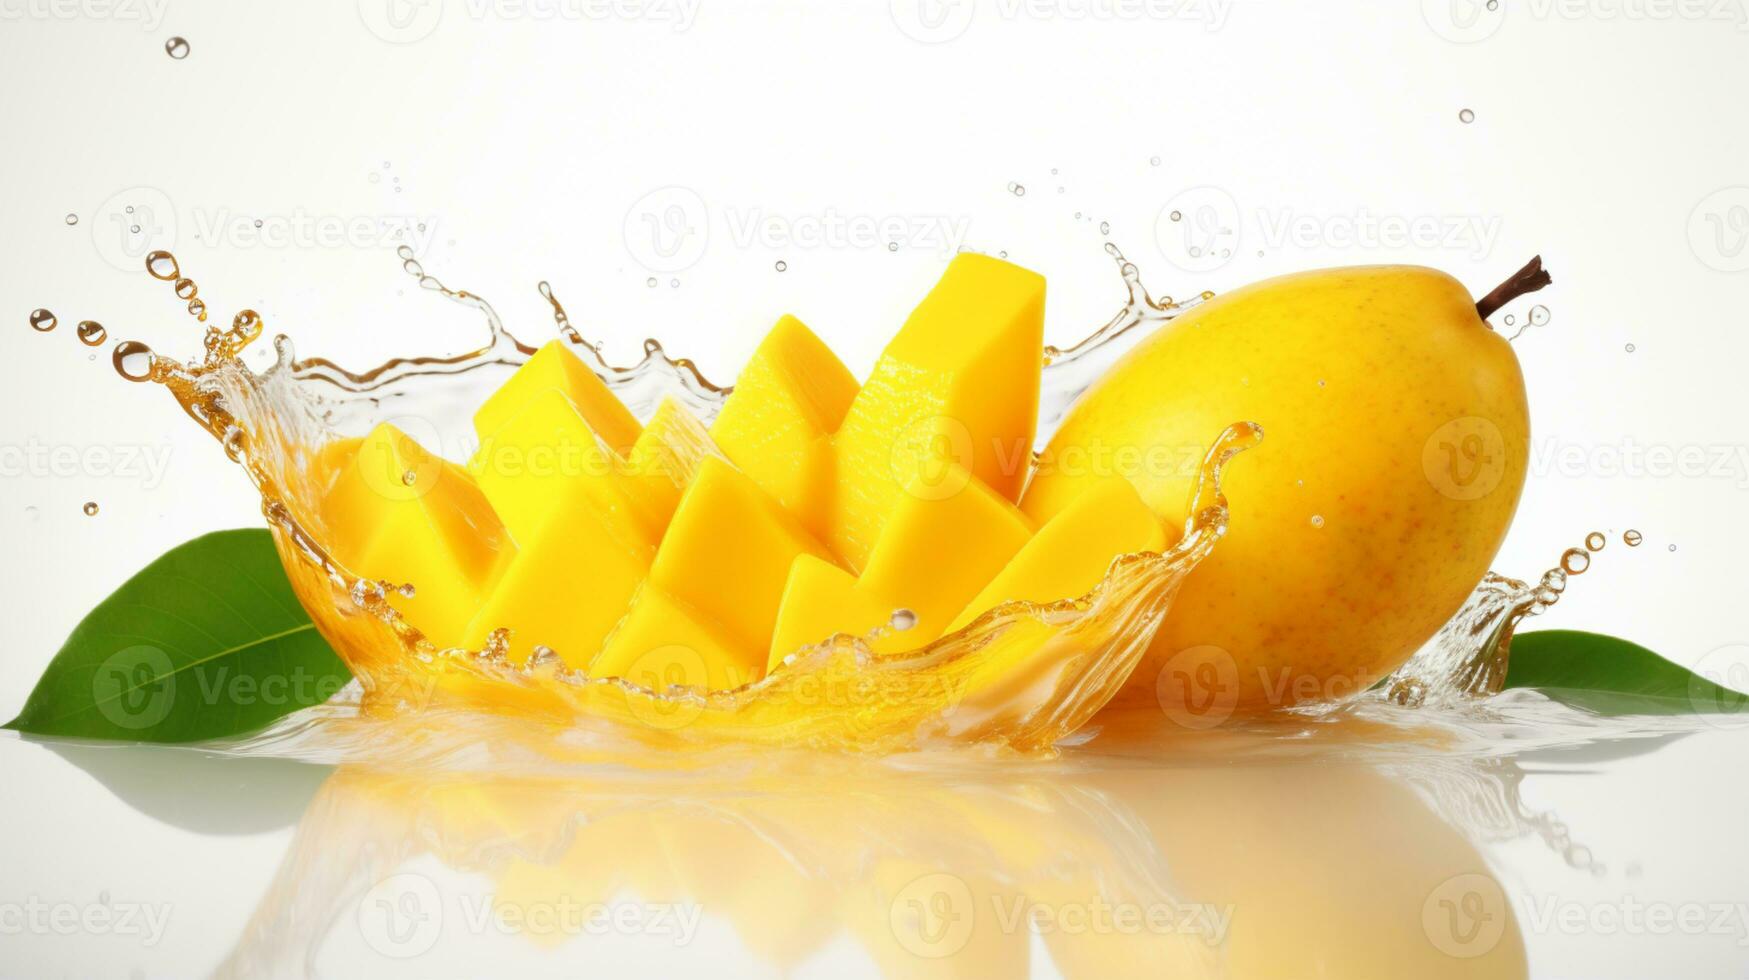 Fresco jugoso mango con agua chapoteo aislado en fondo, sano tropical fruta, ai generativo foto